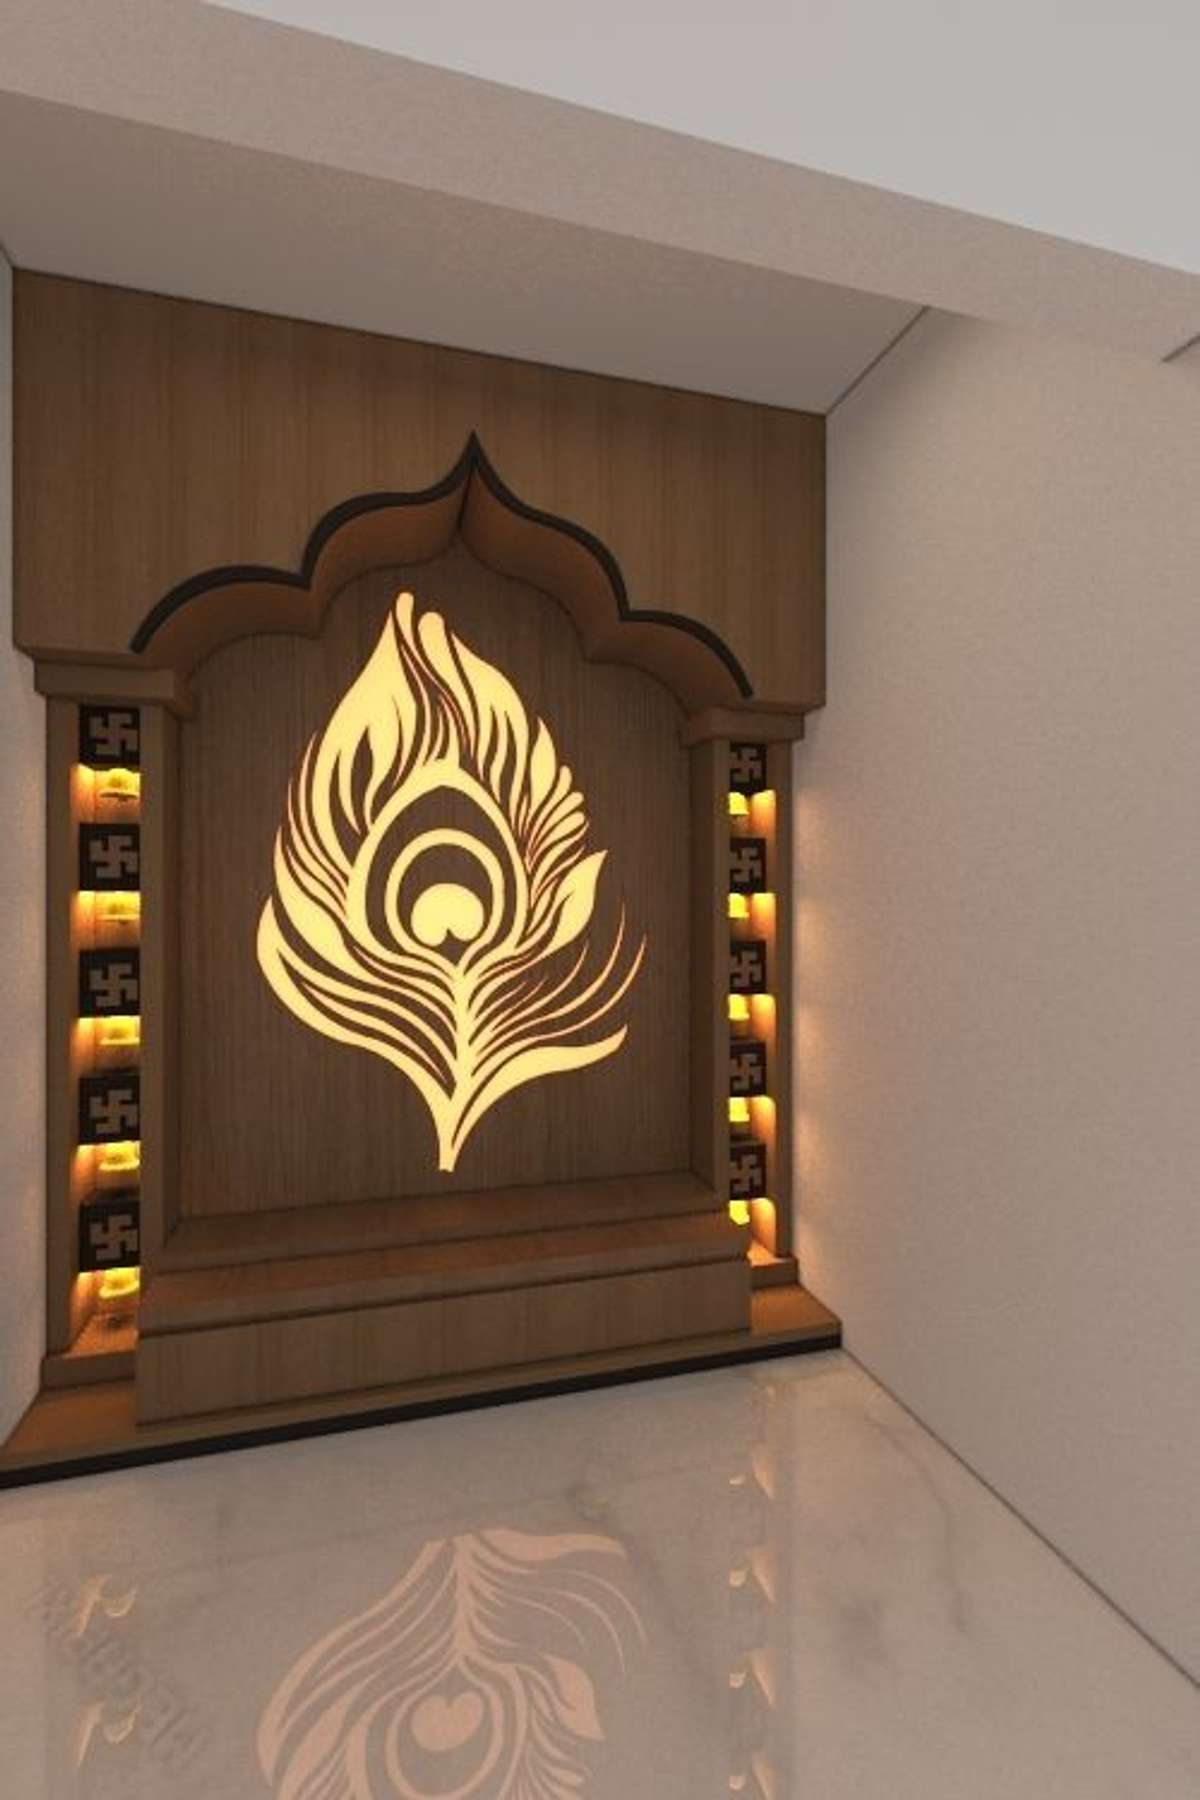 Ultimate Mandir designs
#mandirdesign
#mandir
#Poojaroom
#poojaroomdesign
#interiordesigner
#faridabad
#interiordesign
#bestdesigns 
#homeinterior
#interiordesignerinfaridabad
WWW.MAJESTICINTERIORS.CO.IN
9911692170